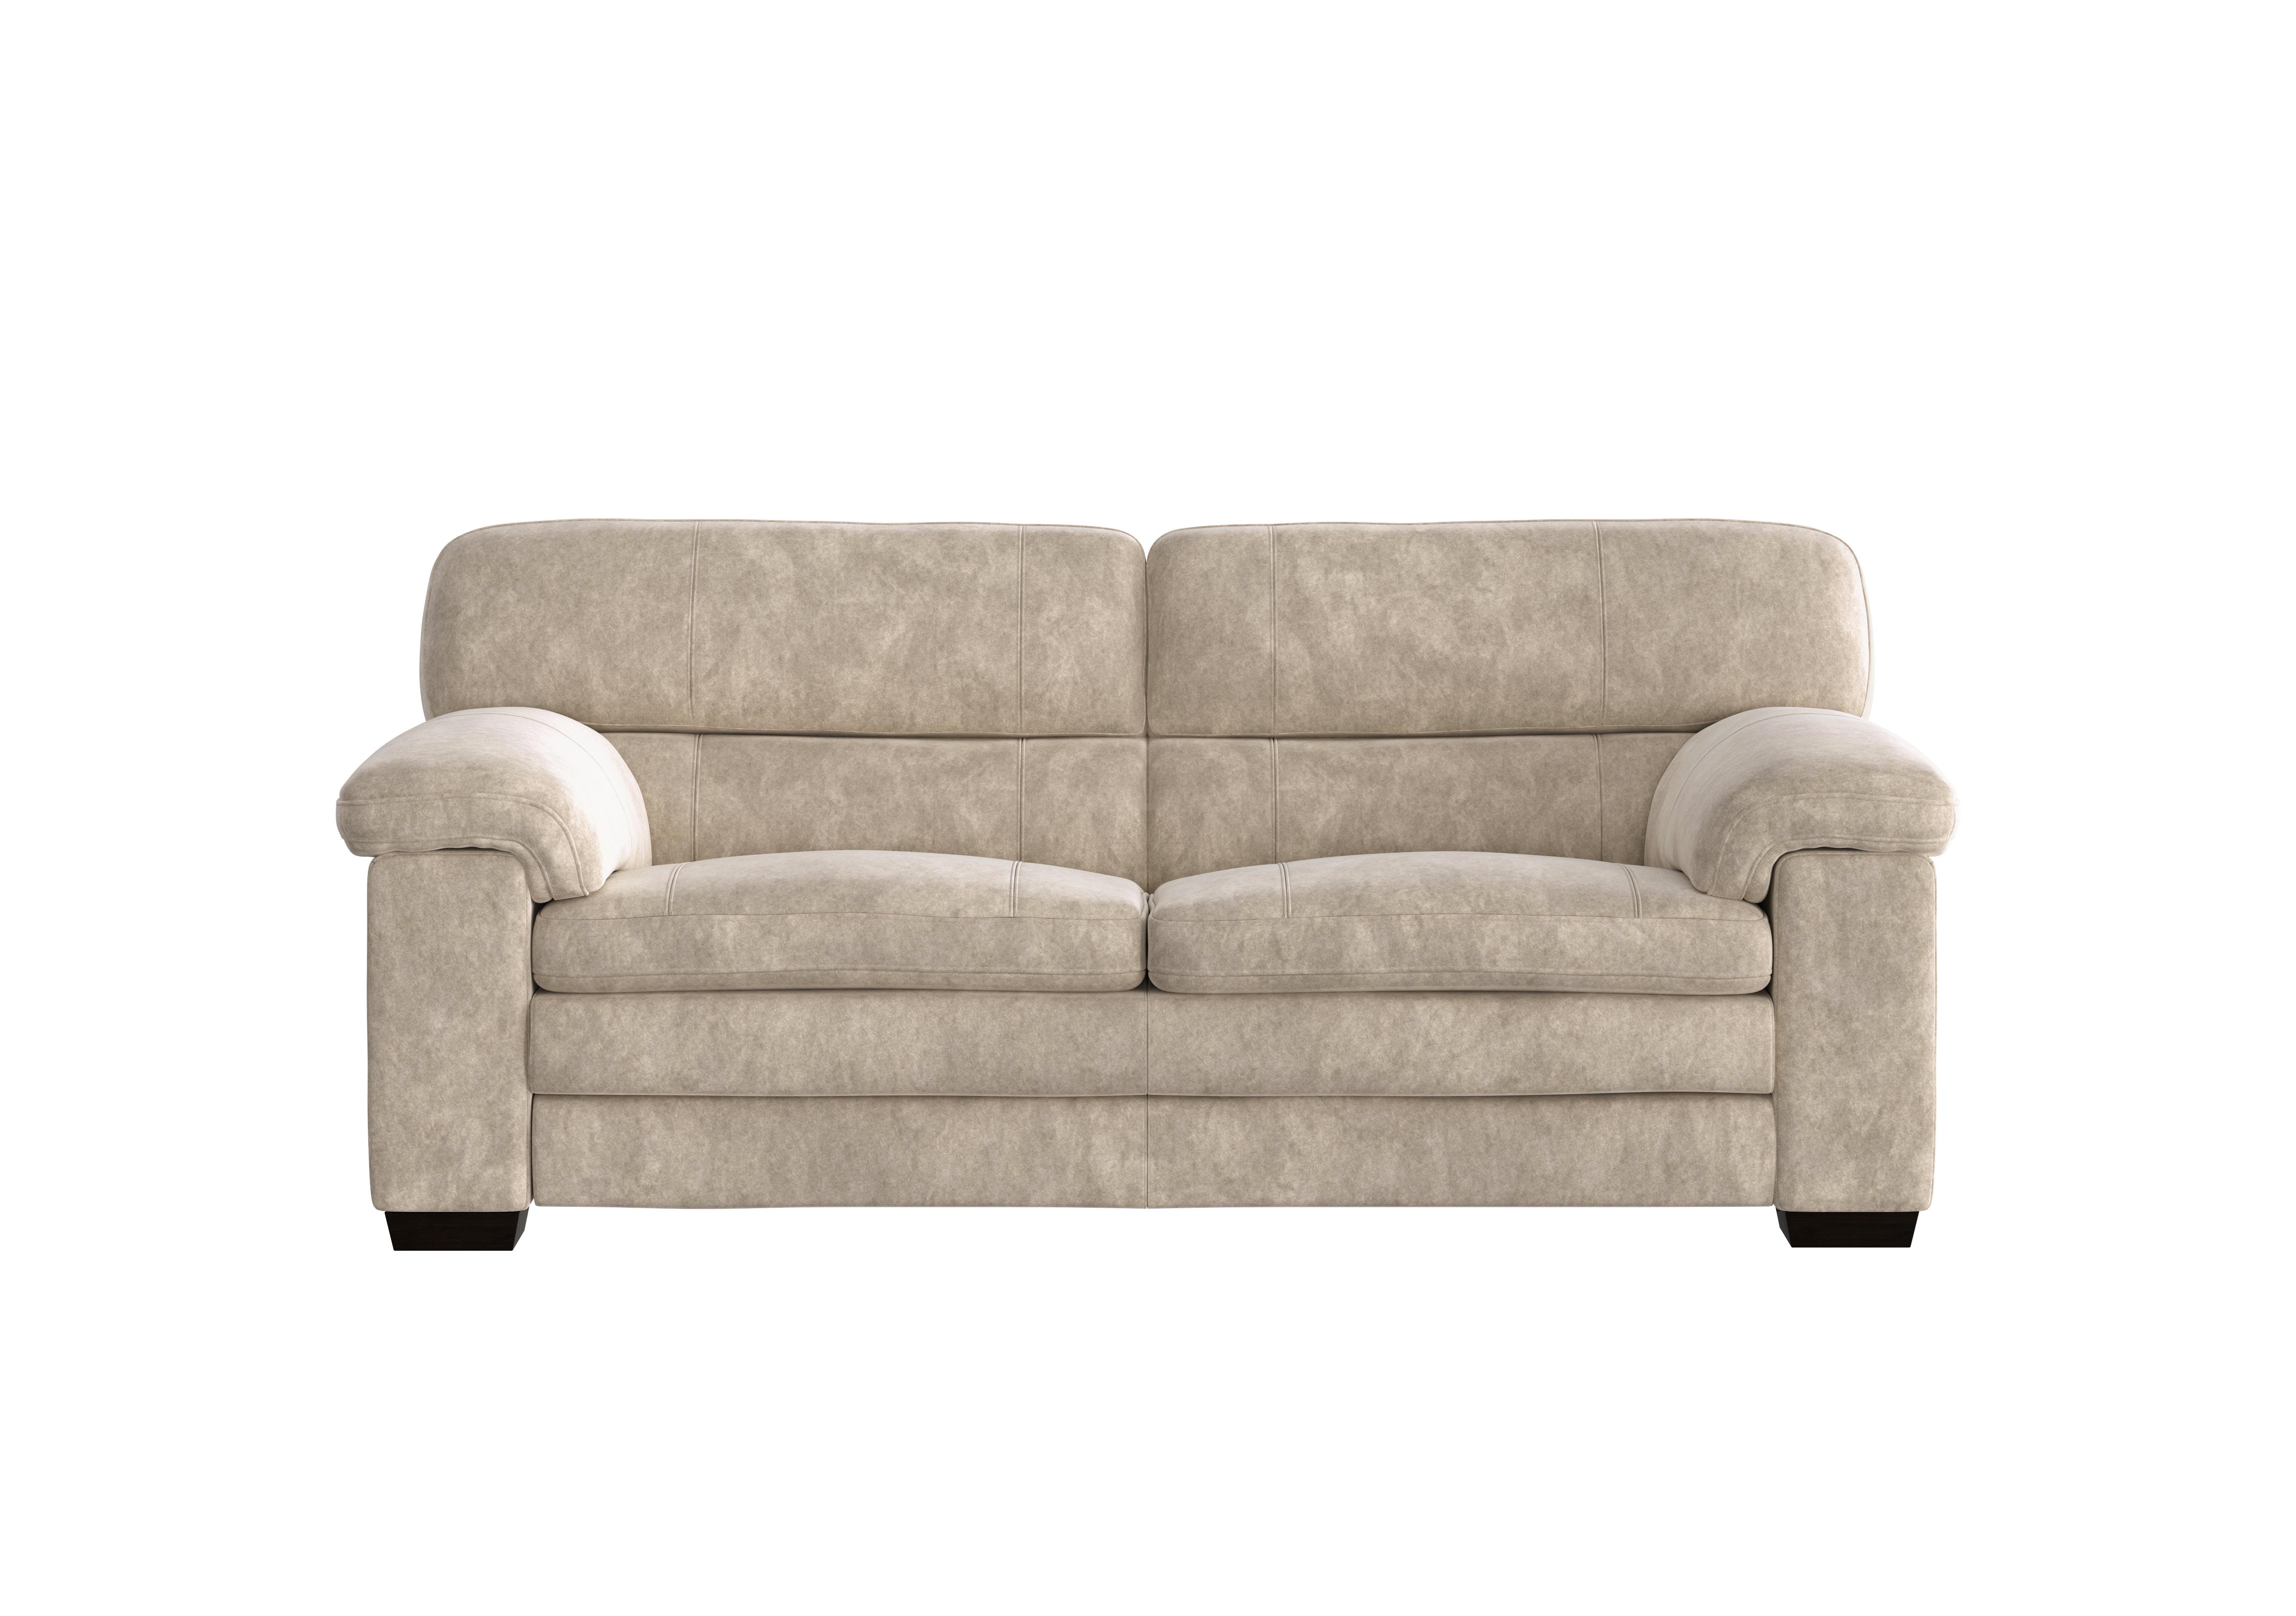 Cozee Fabric 2.5 Seater Sofa in Bfa-Bnn-R26 Fv2 Cream on Furniture Village